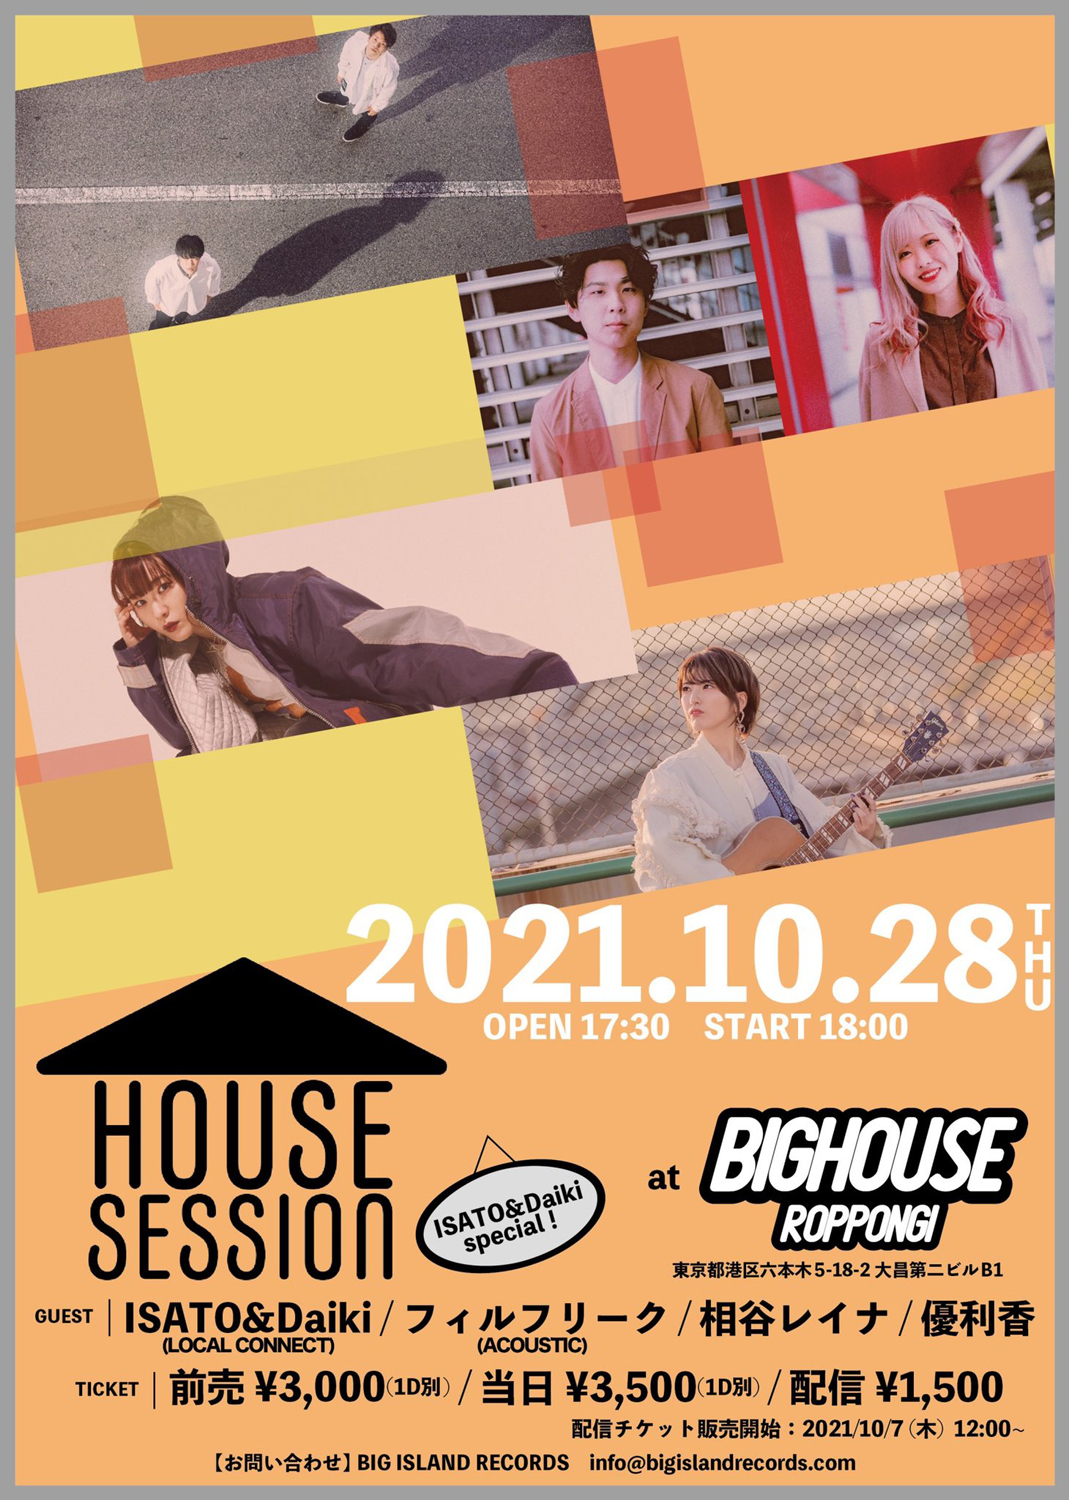 HOUSE SESSION ISATO & Daiki special!